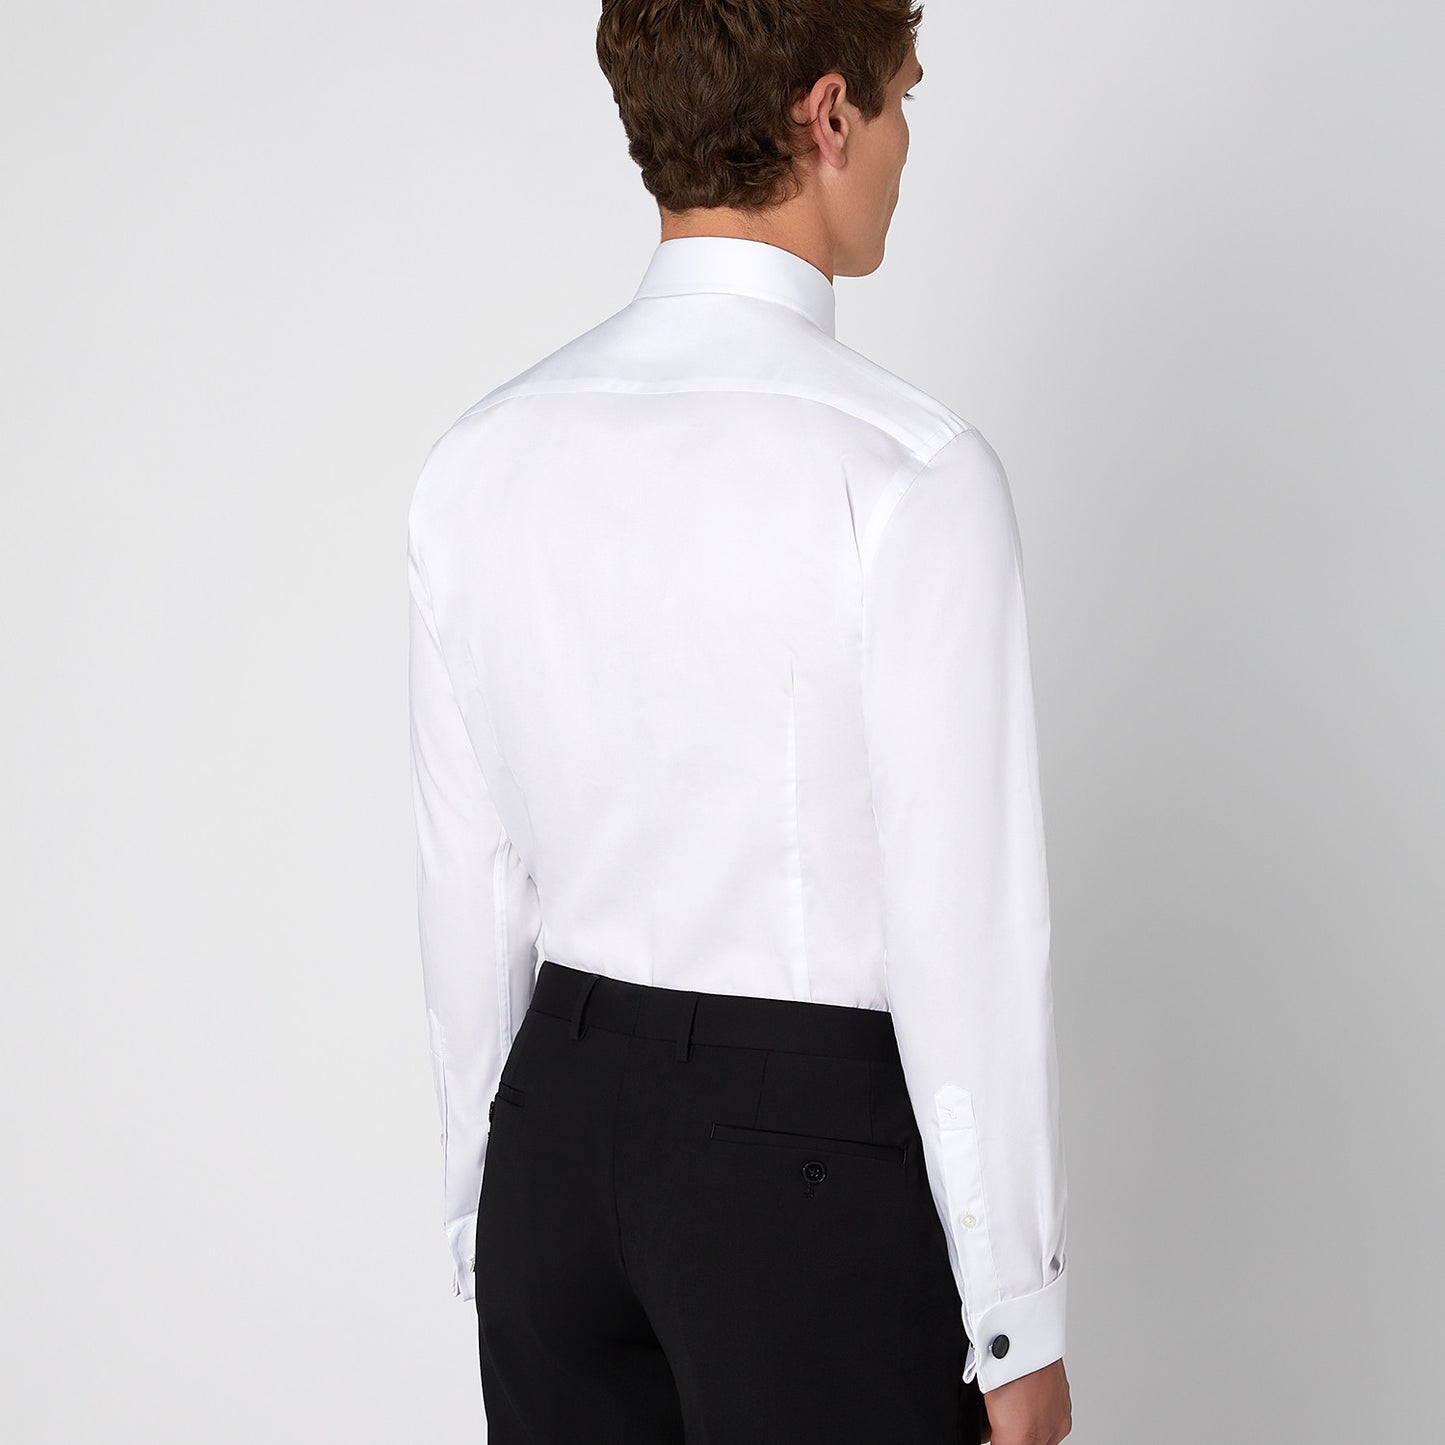 Remus Uomo 18811 01 White Tapered Fit Black Stud Dress Shirt